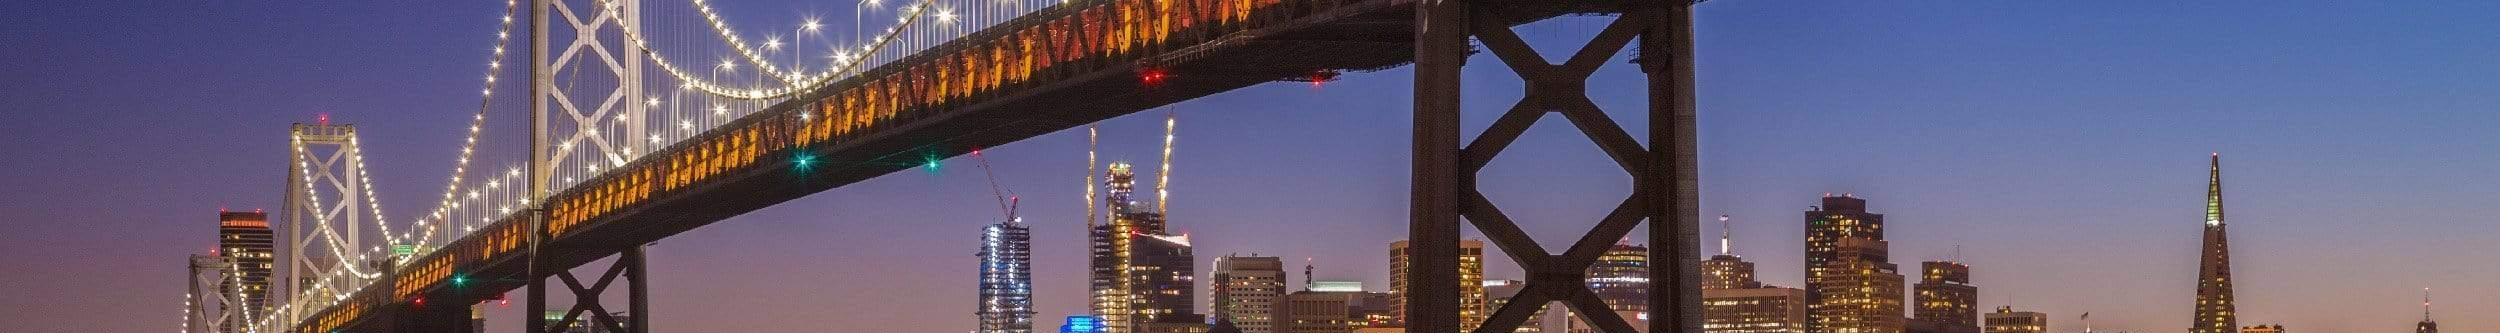 Oakland Bay Bridge at Night with Skyline